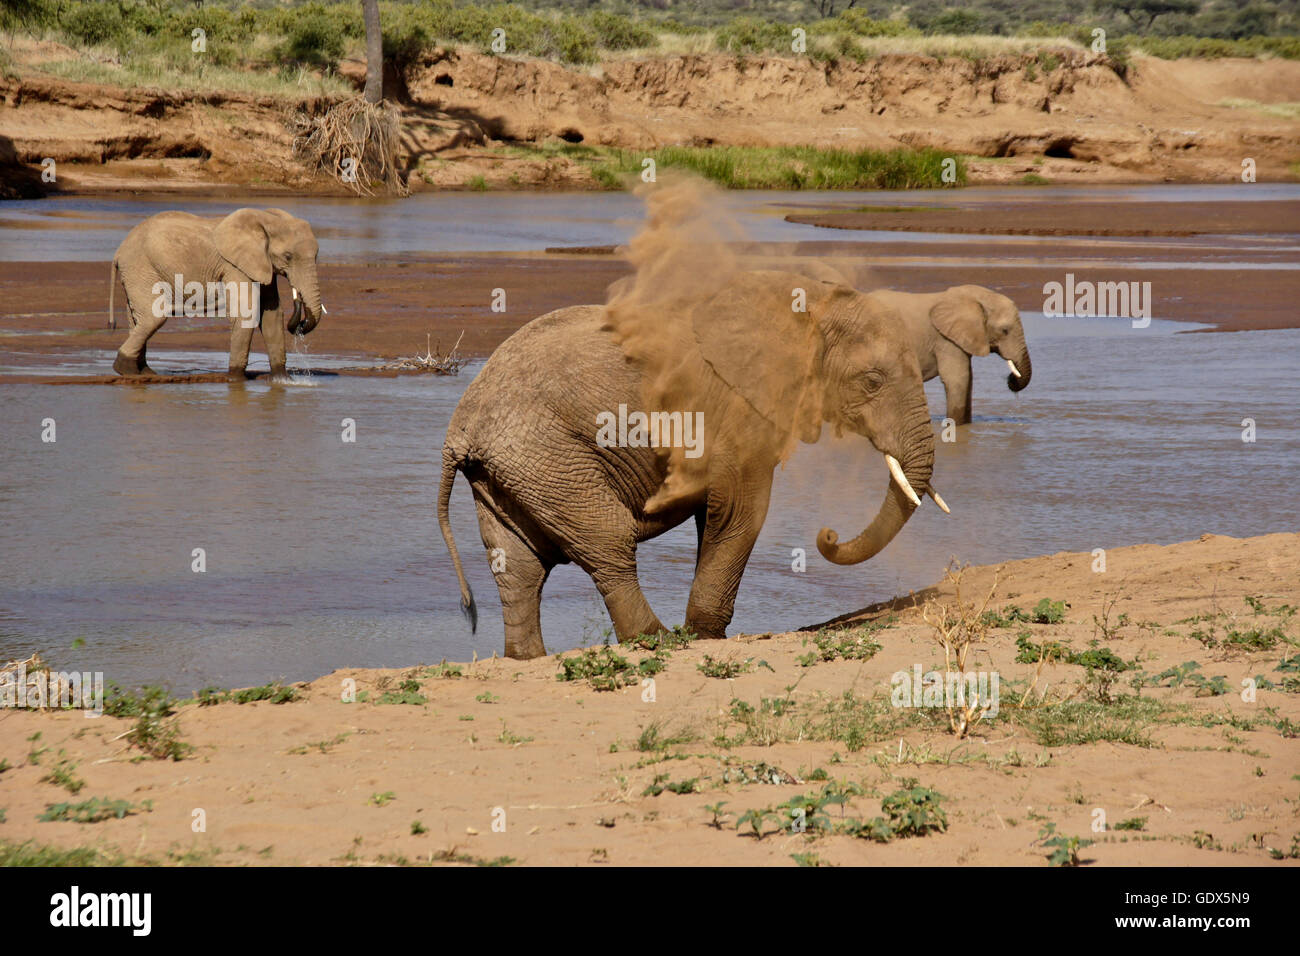 Elefanten im Fluss (Uaso) Uaso Nyiro zu trinken, während ein anderer Staub Badewanne, Samburu, Kenia nimmt Stockfoto